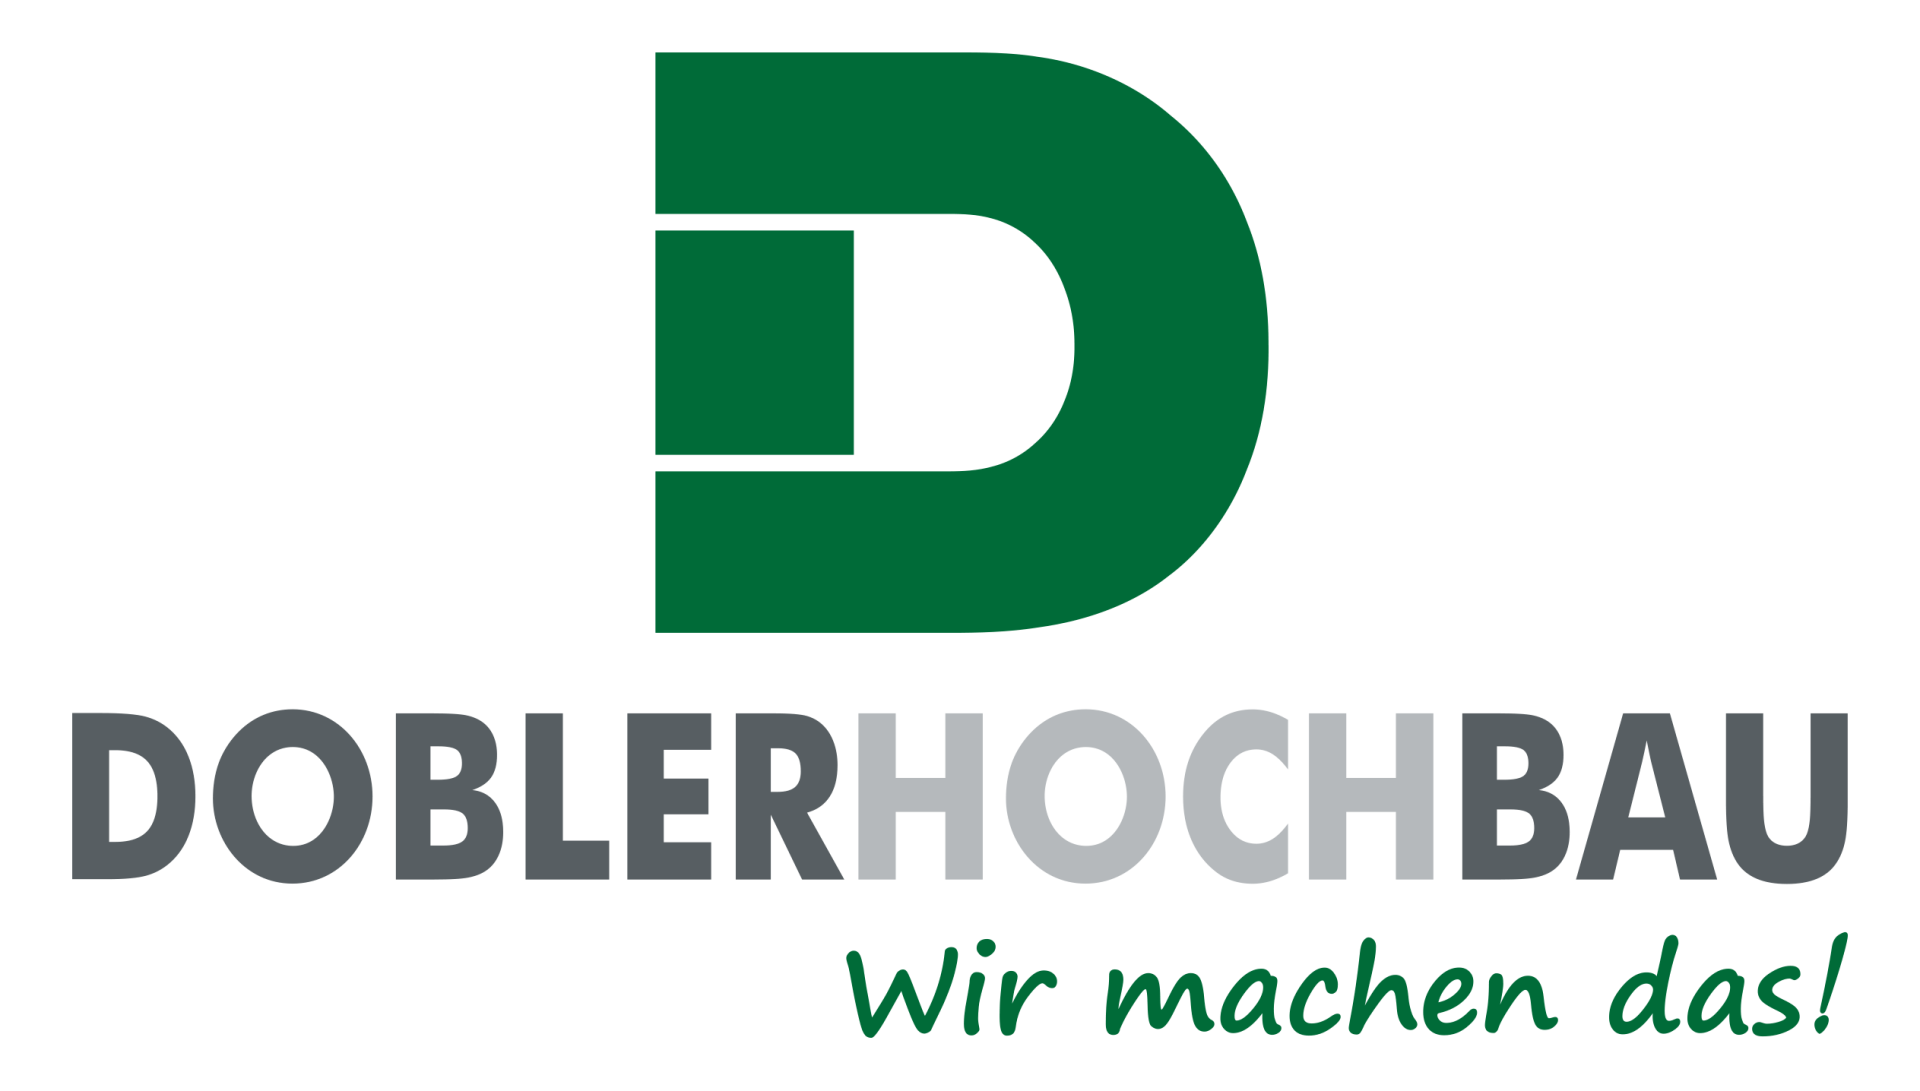 Logo Dobler Hochbau, großes grünes D und Schriftzug